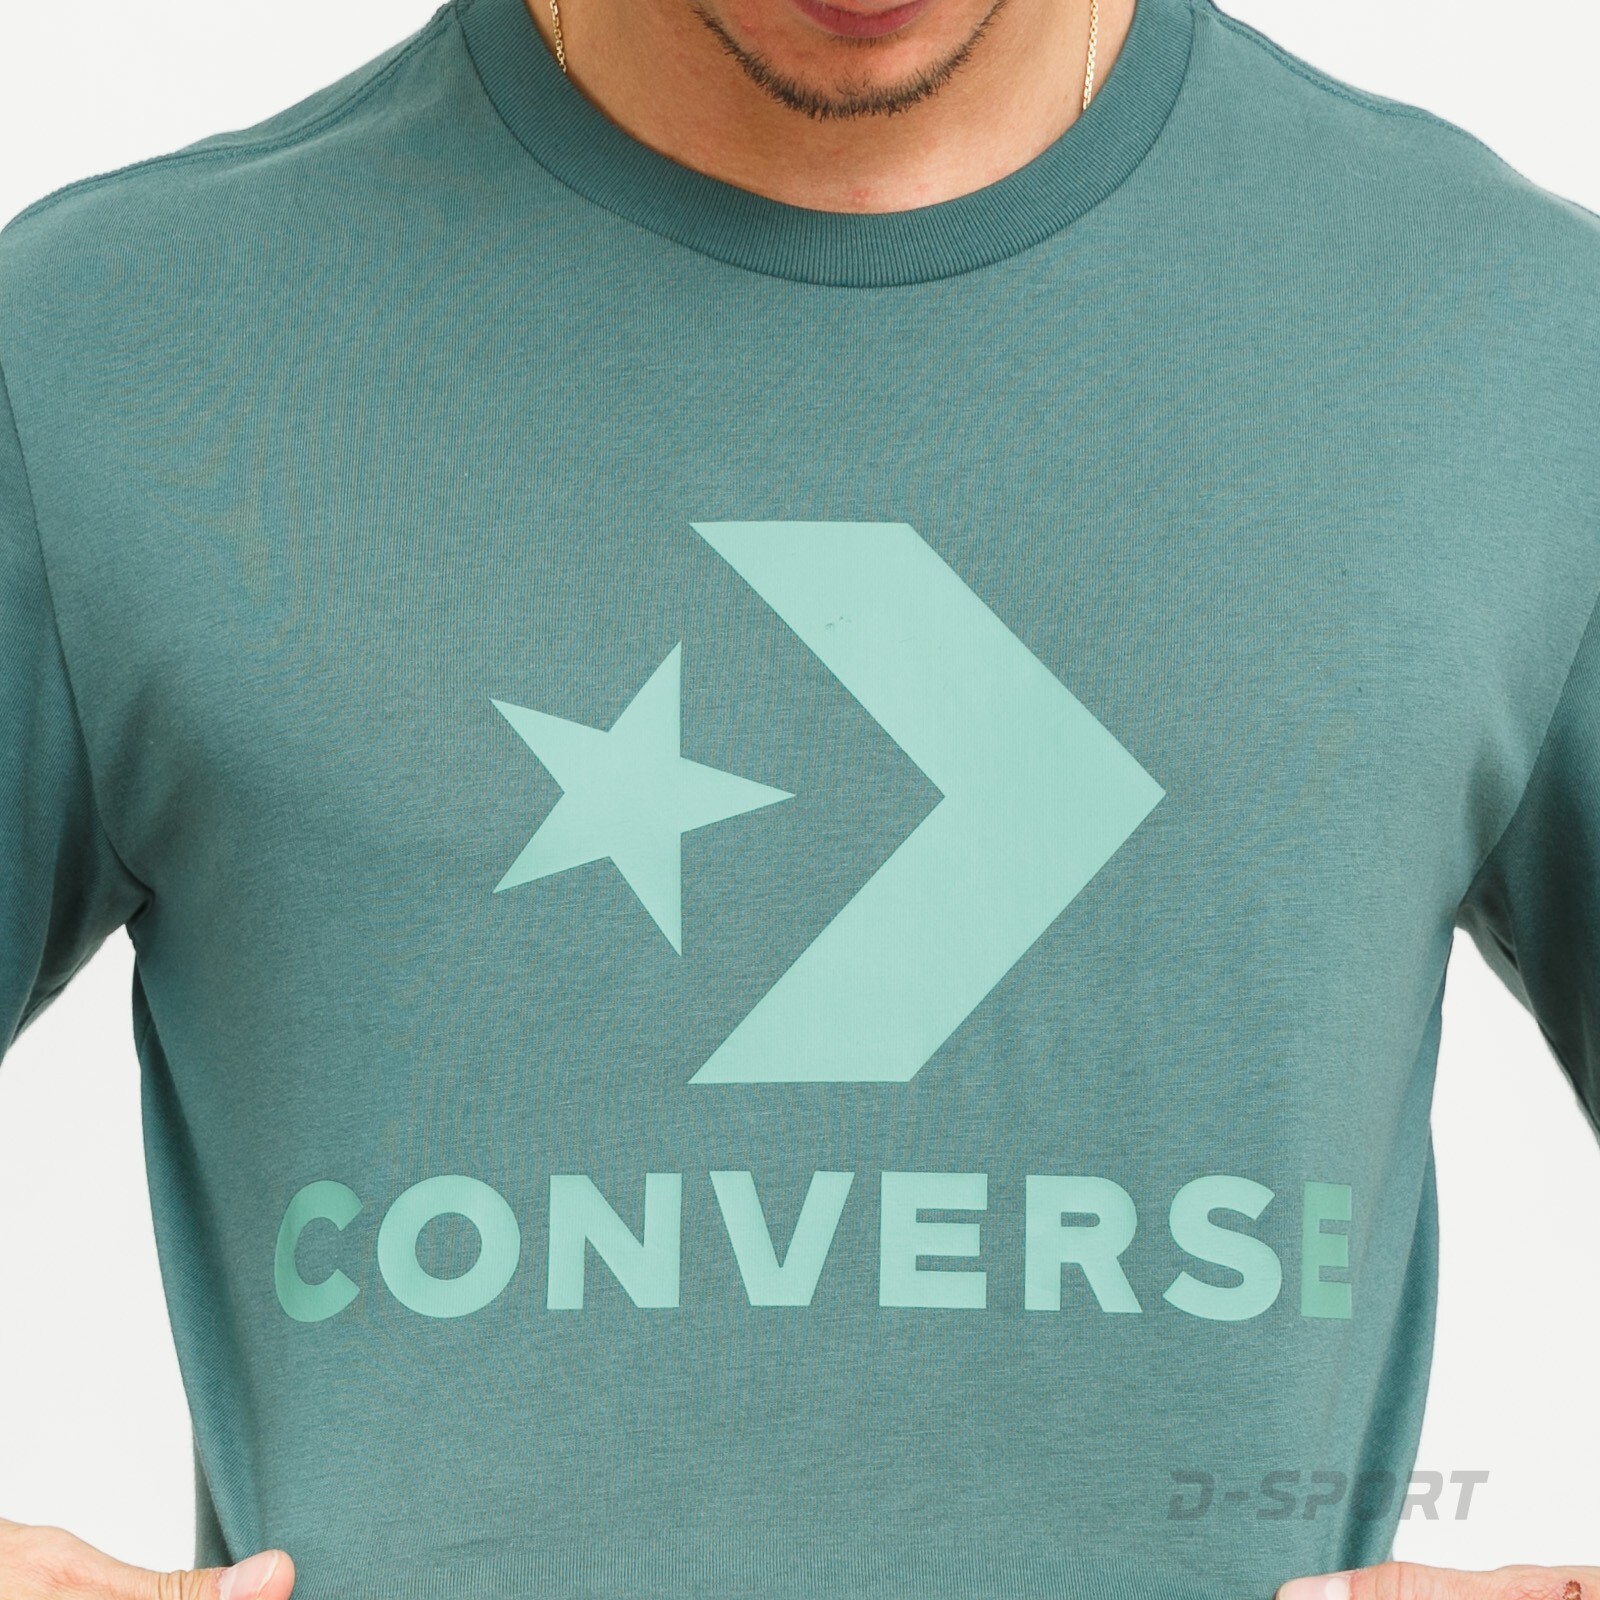 Converse Star Chevron Graphic Tee